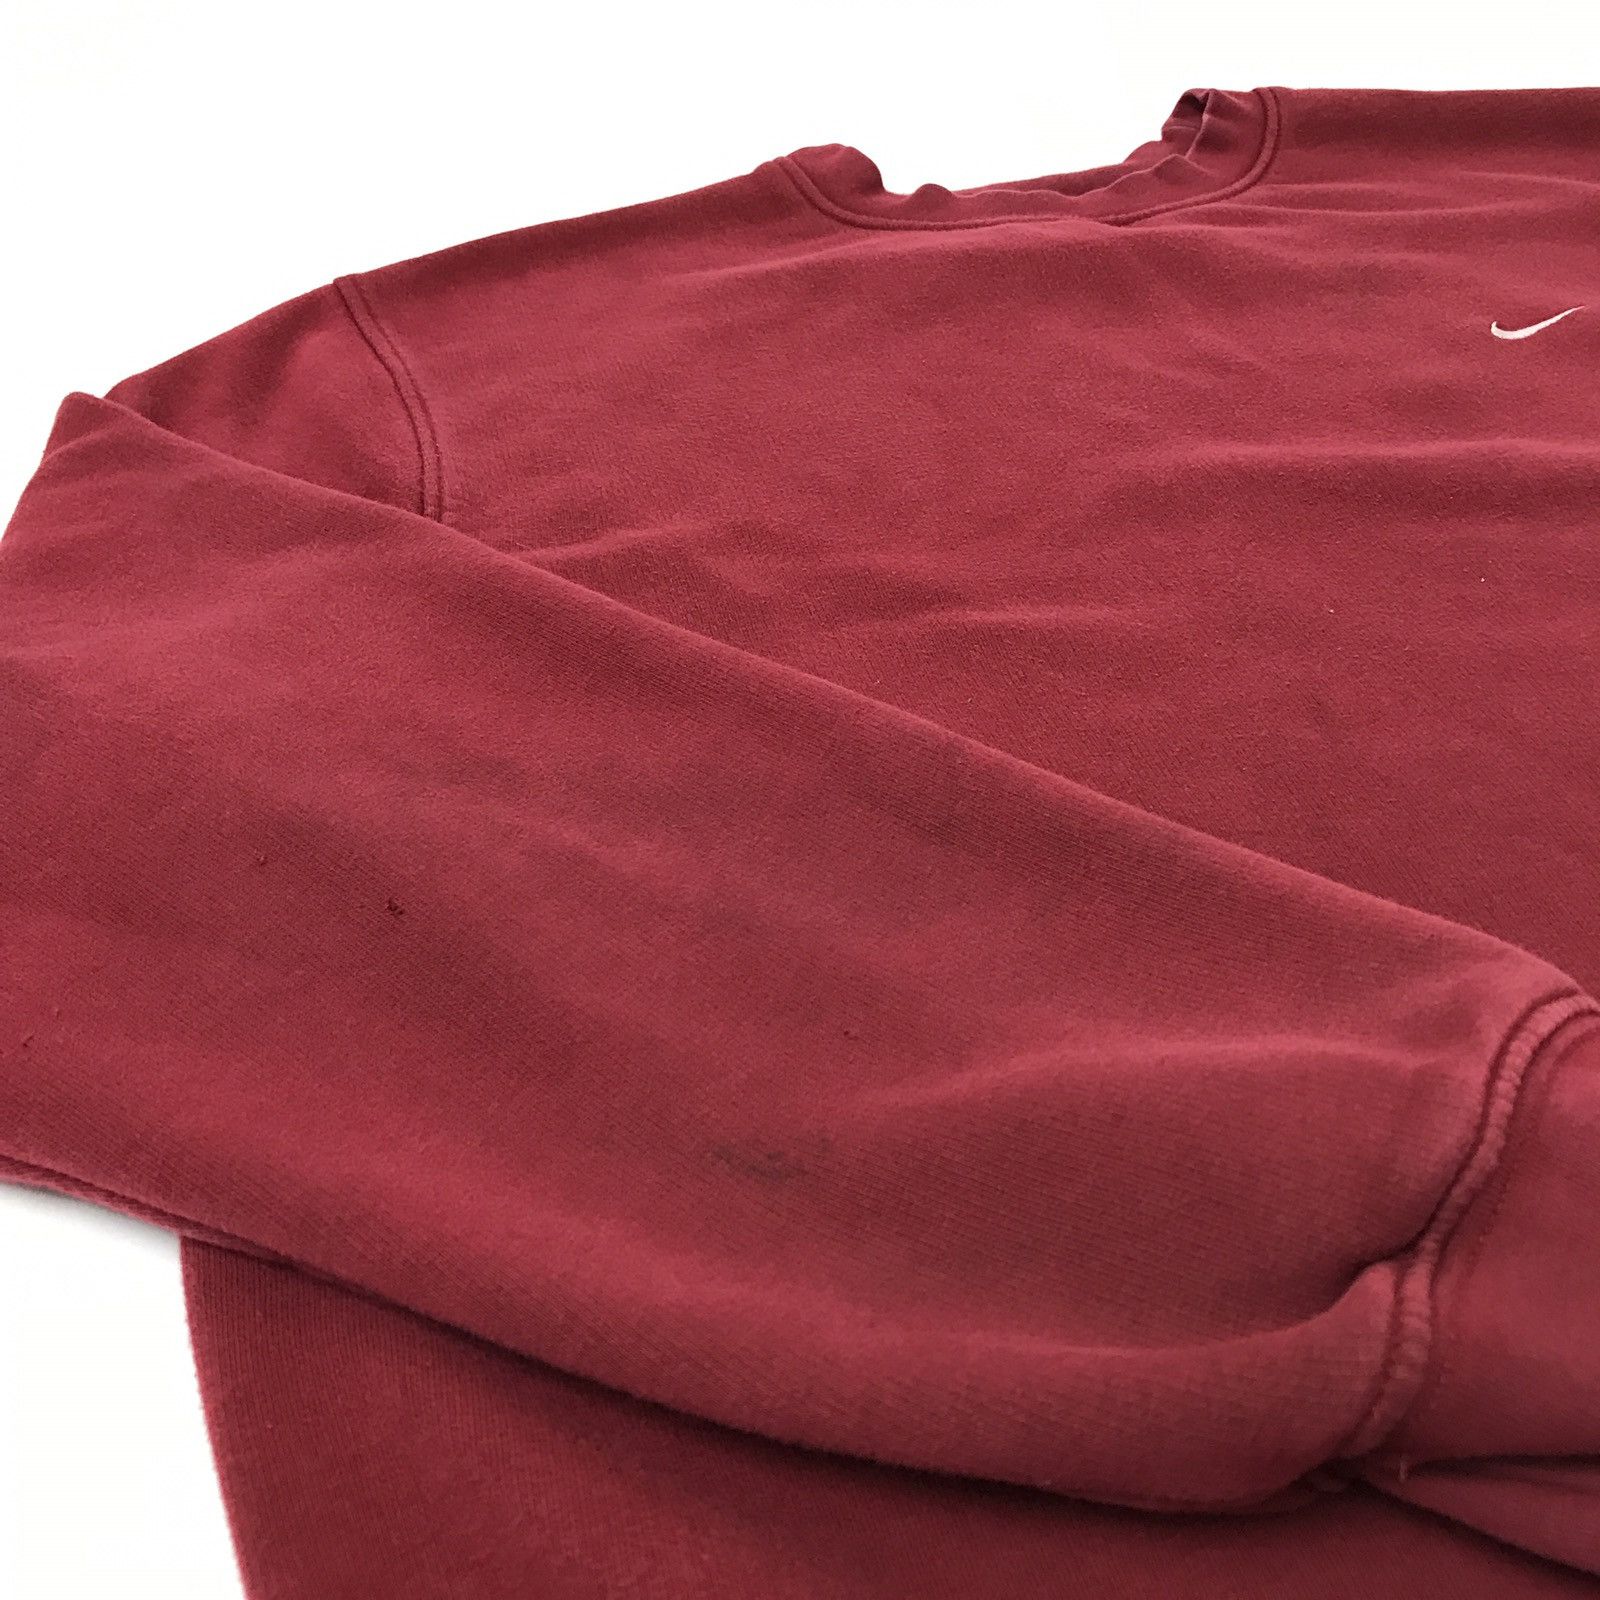 Nike Nike maroon embroidered crewneck sweatshirt Size US XL / EU 56 / 4 - 3 Thumbnail